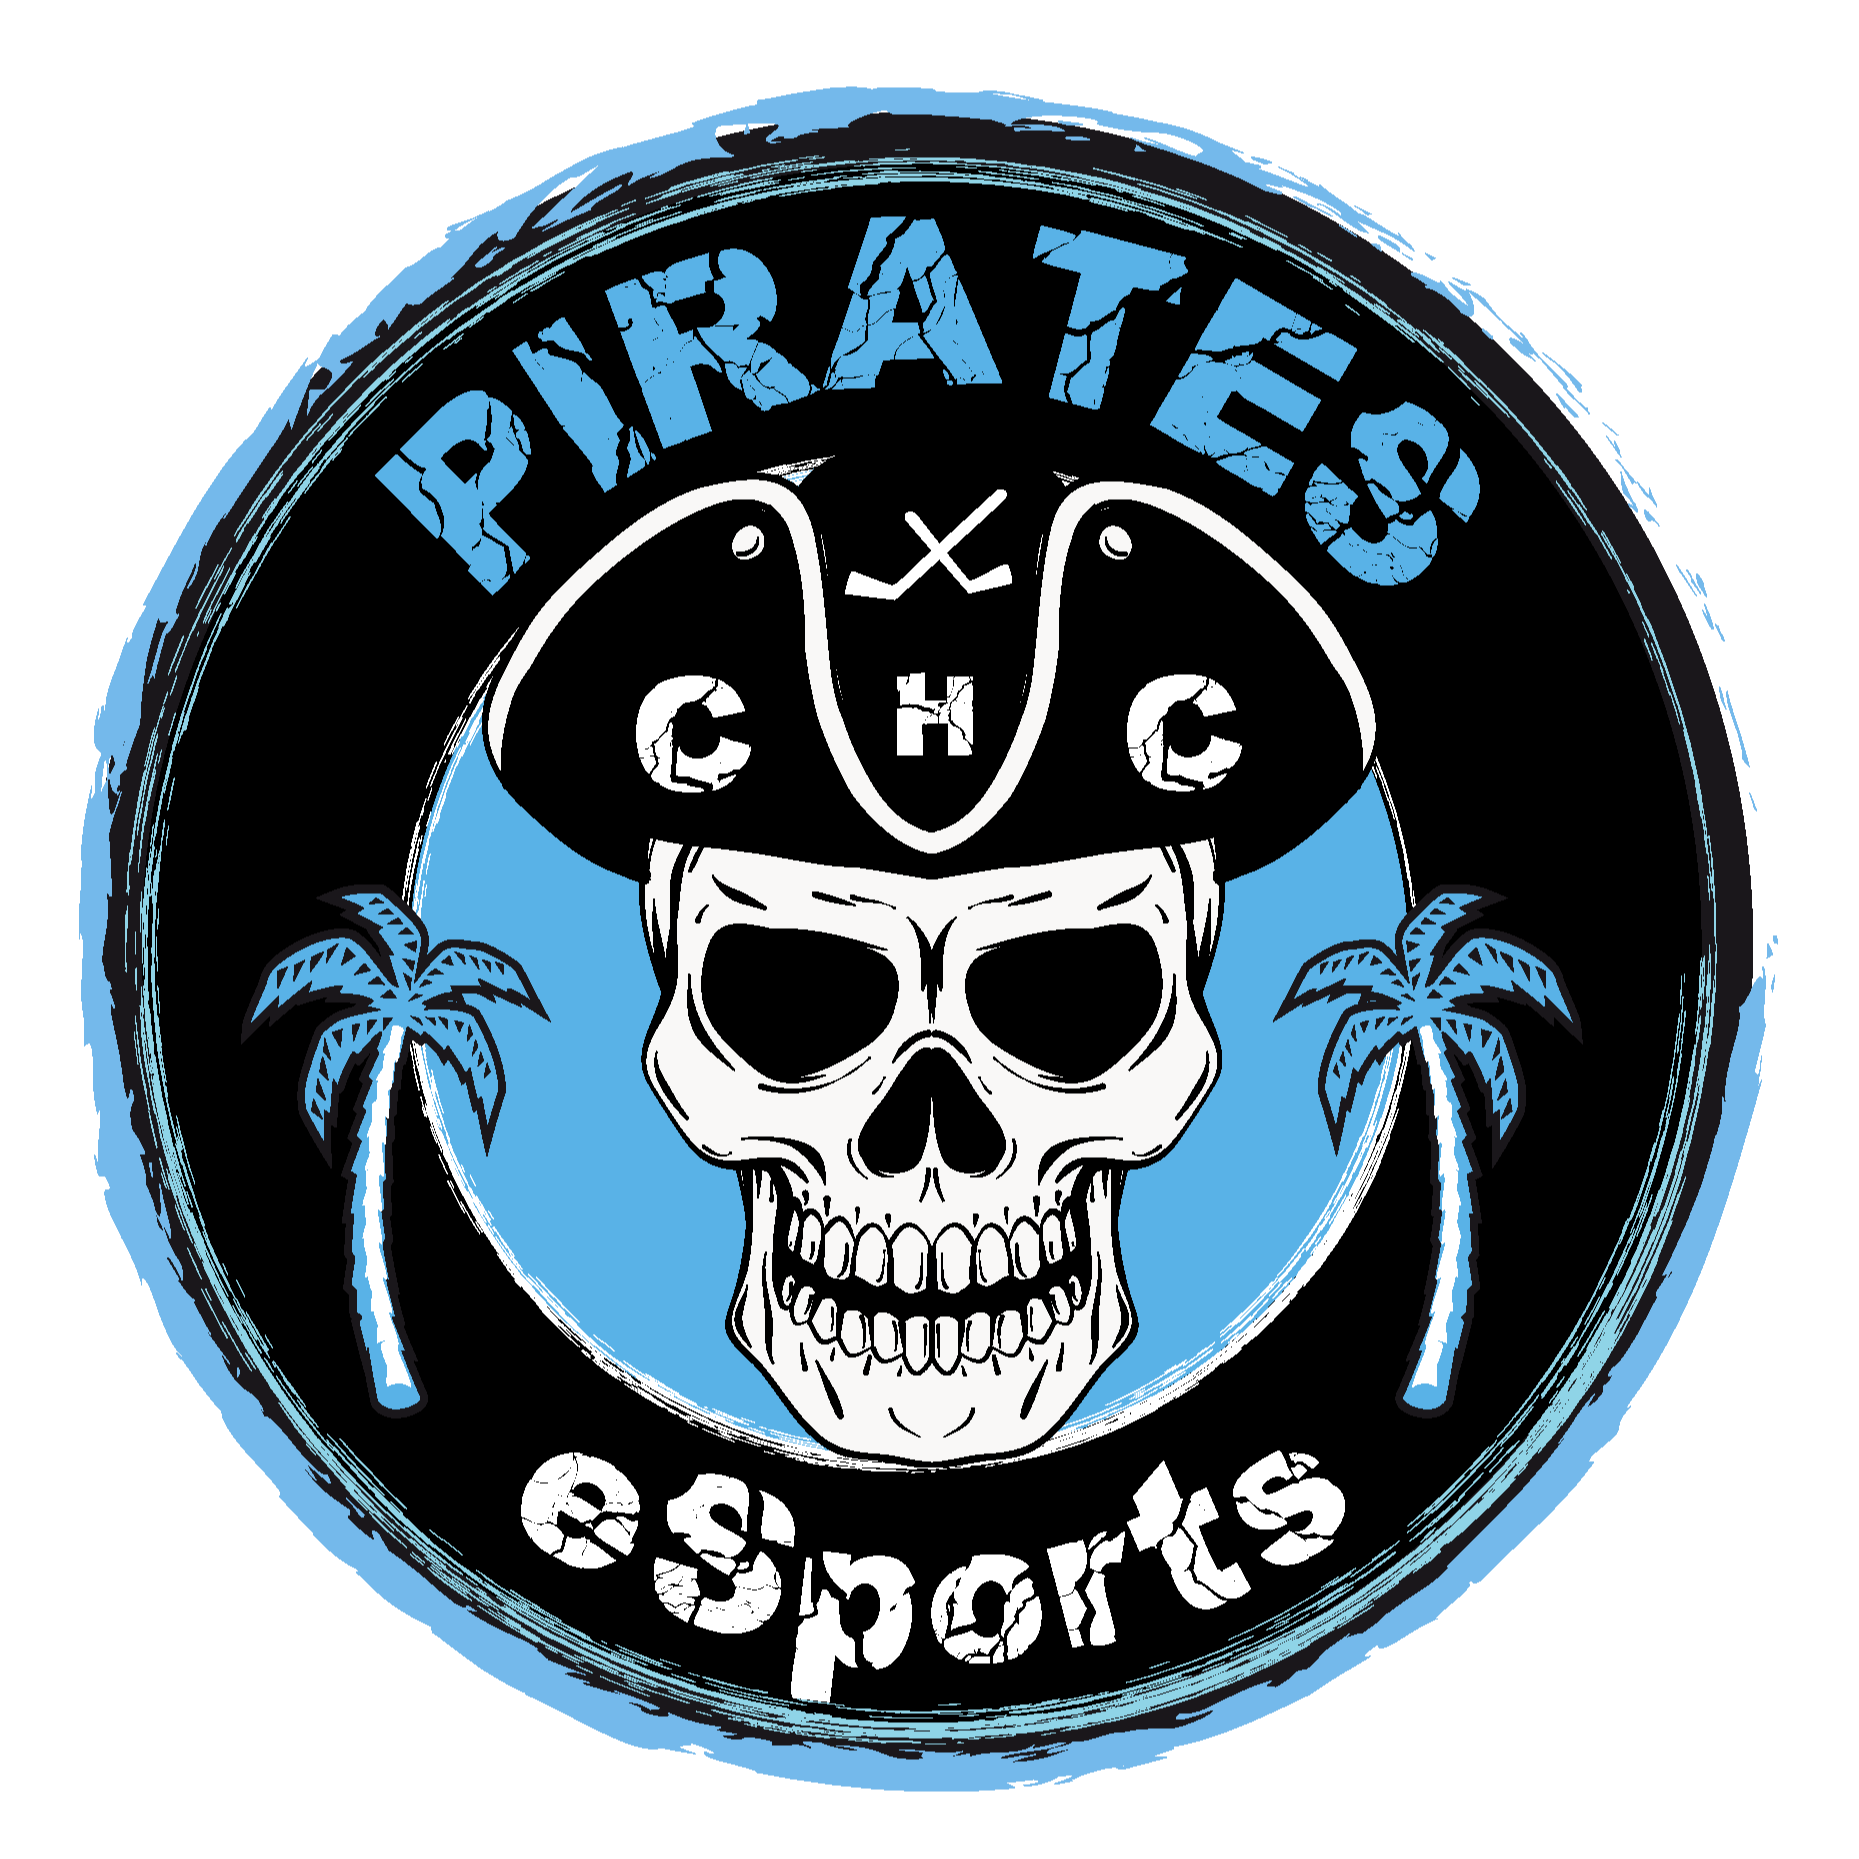 Pirates eSports